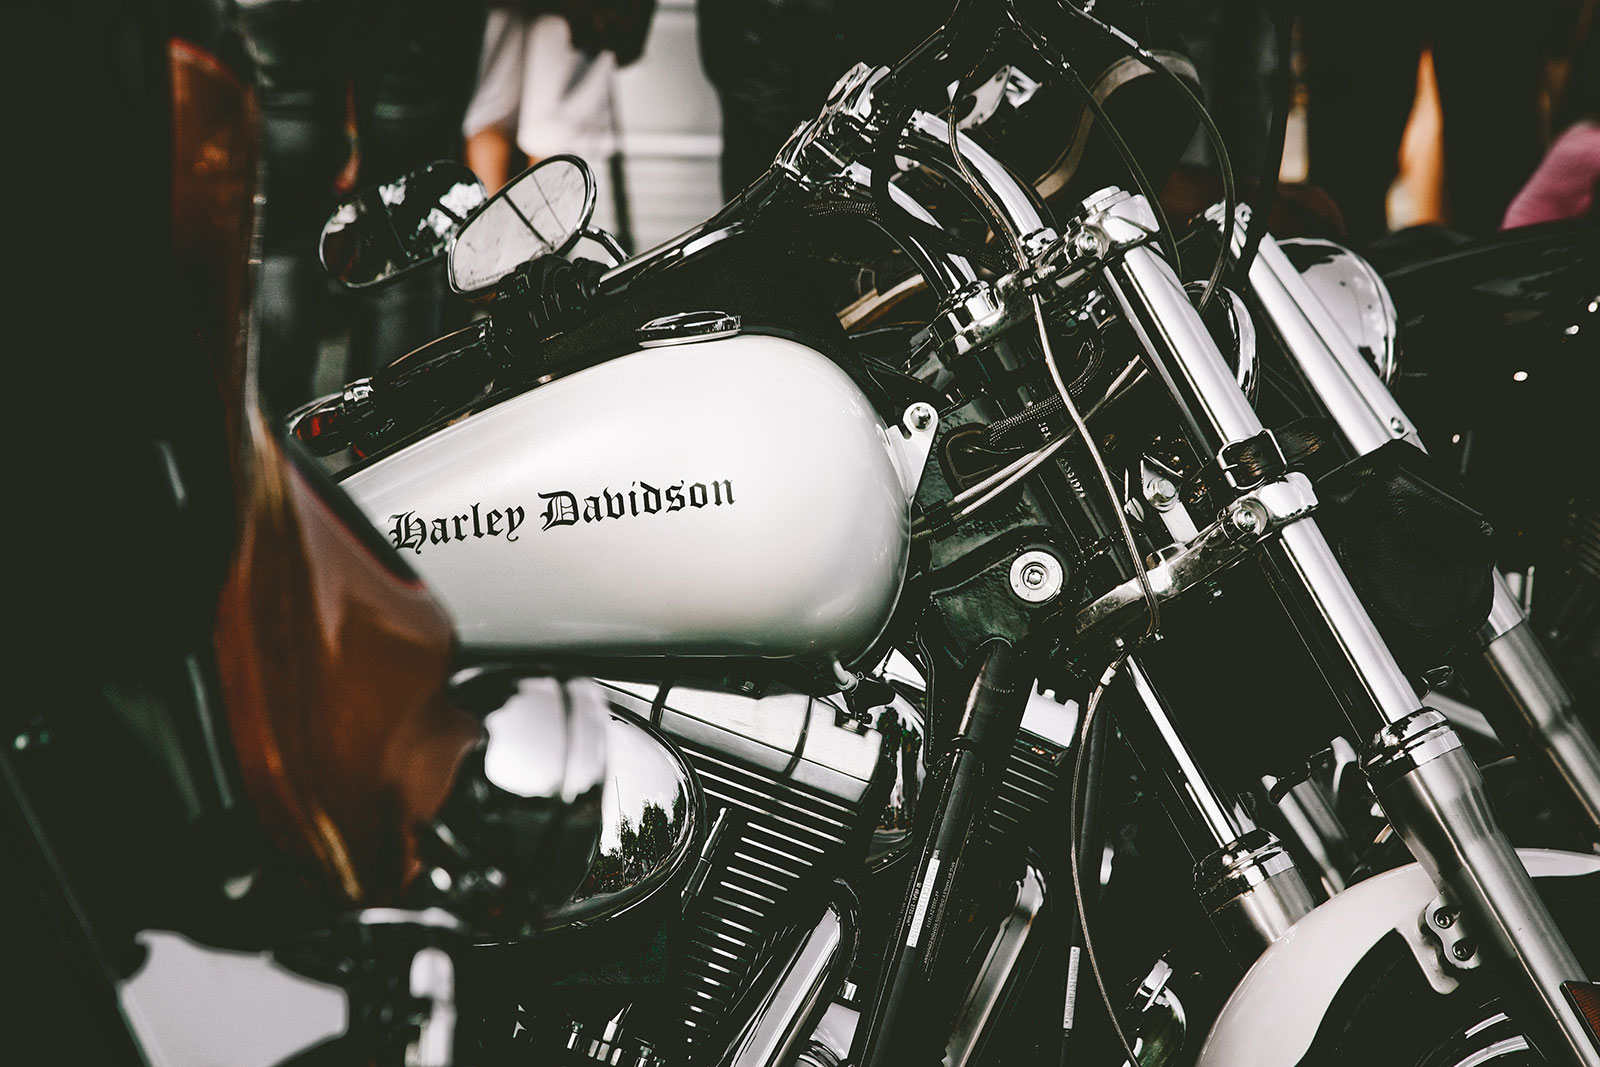 Bringing Flagship Harley Davidson Dealership to Boston Area